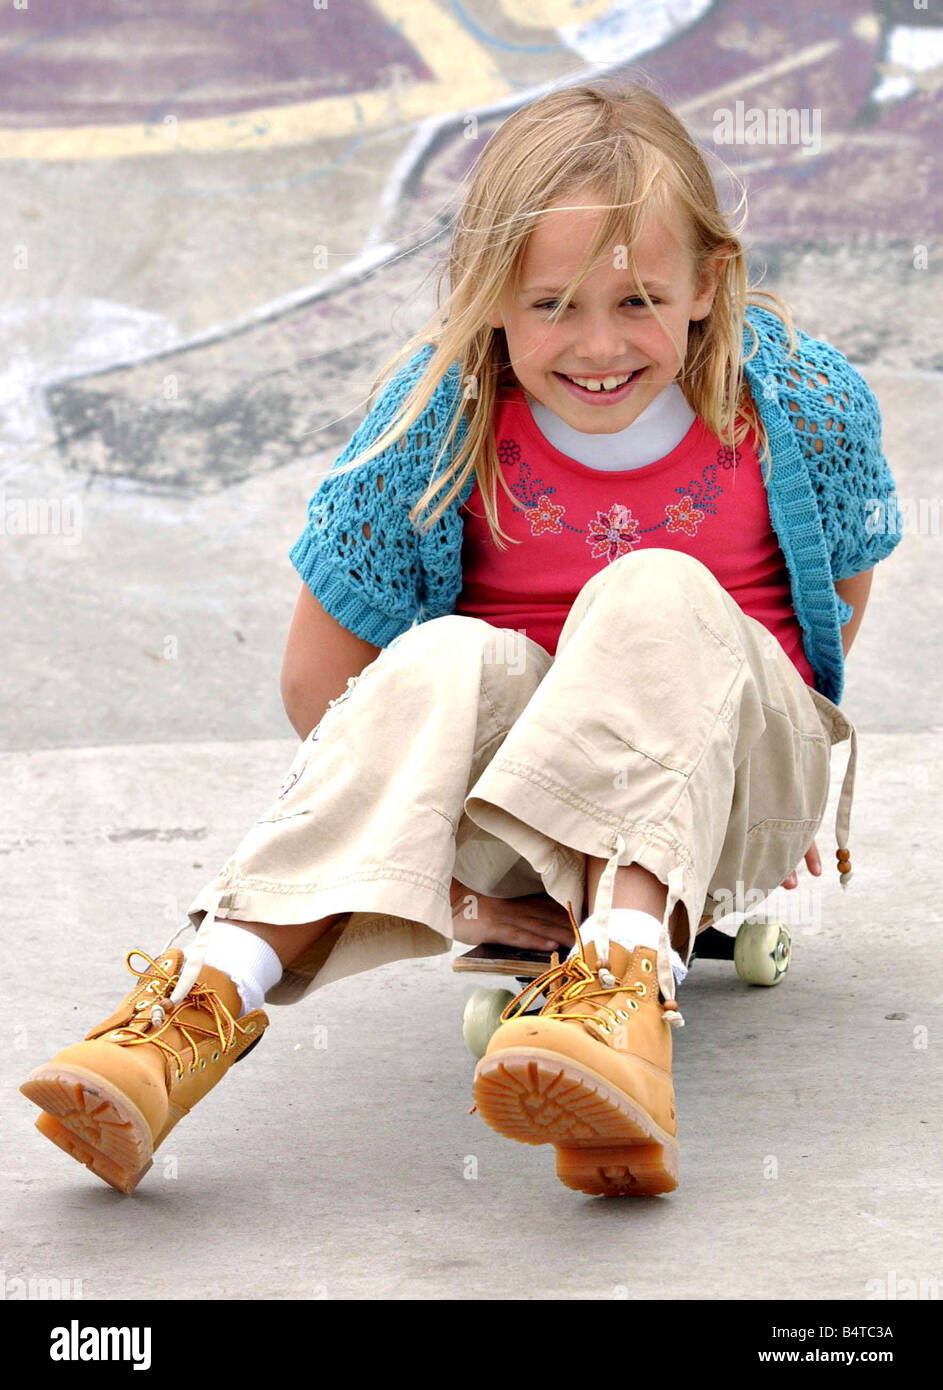 Skateboard Kids Fashion Giugno 2005 modello Kirsty indossare stivali  timberland blu rosa cardi t shirt pantaloni beige Foto stock - Alamy